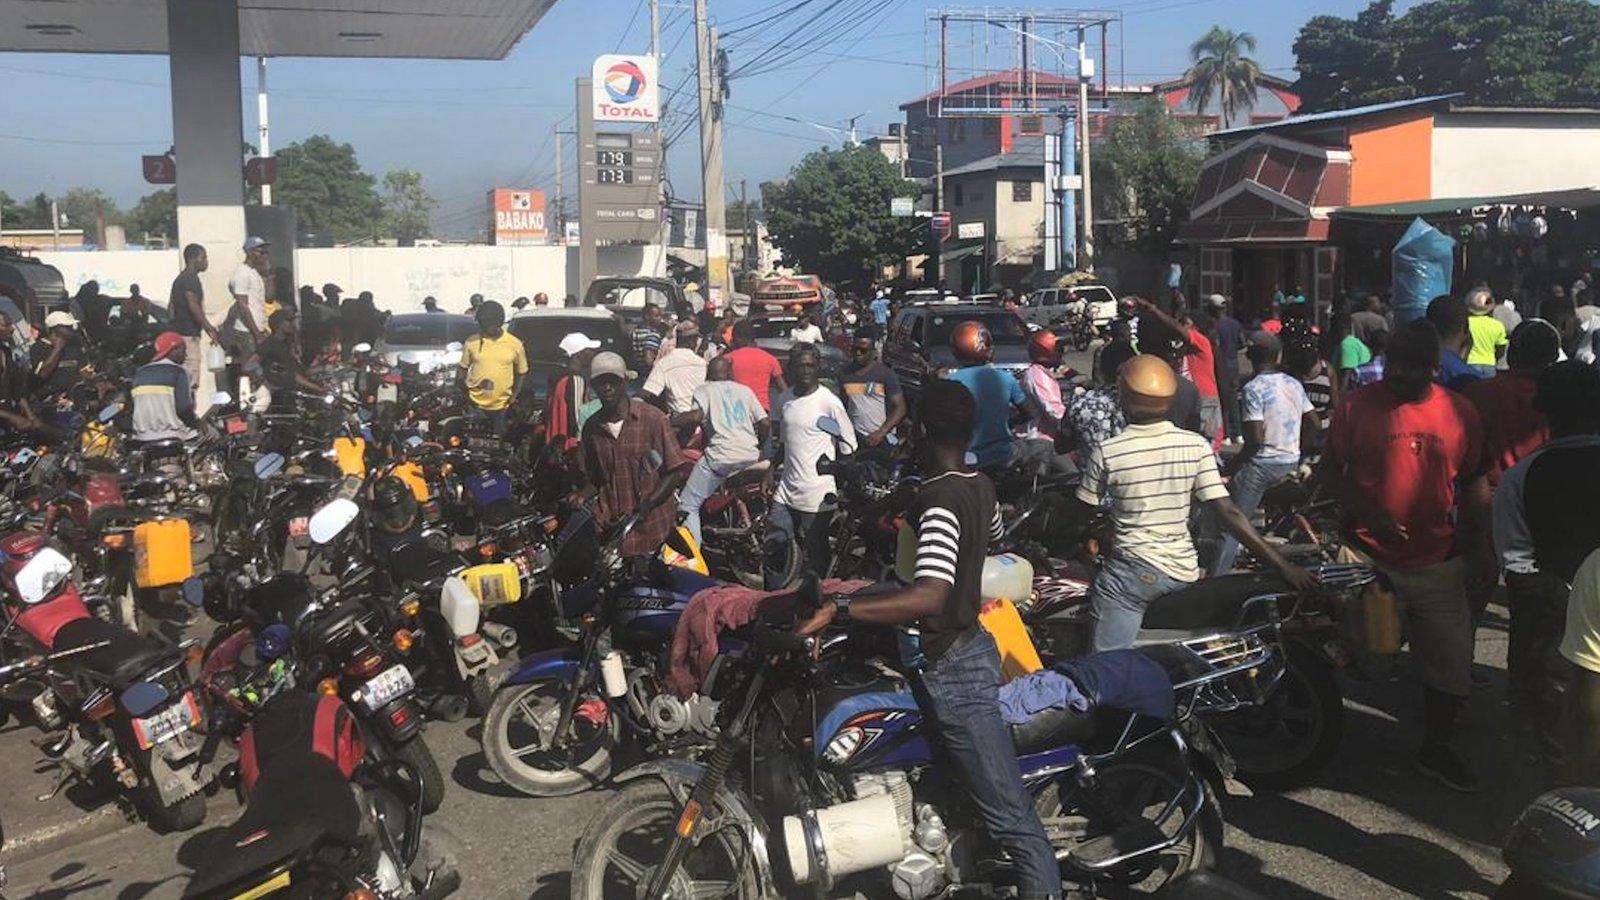 Conditions worsen in Haiti amid fuel shortages